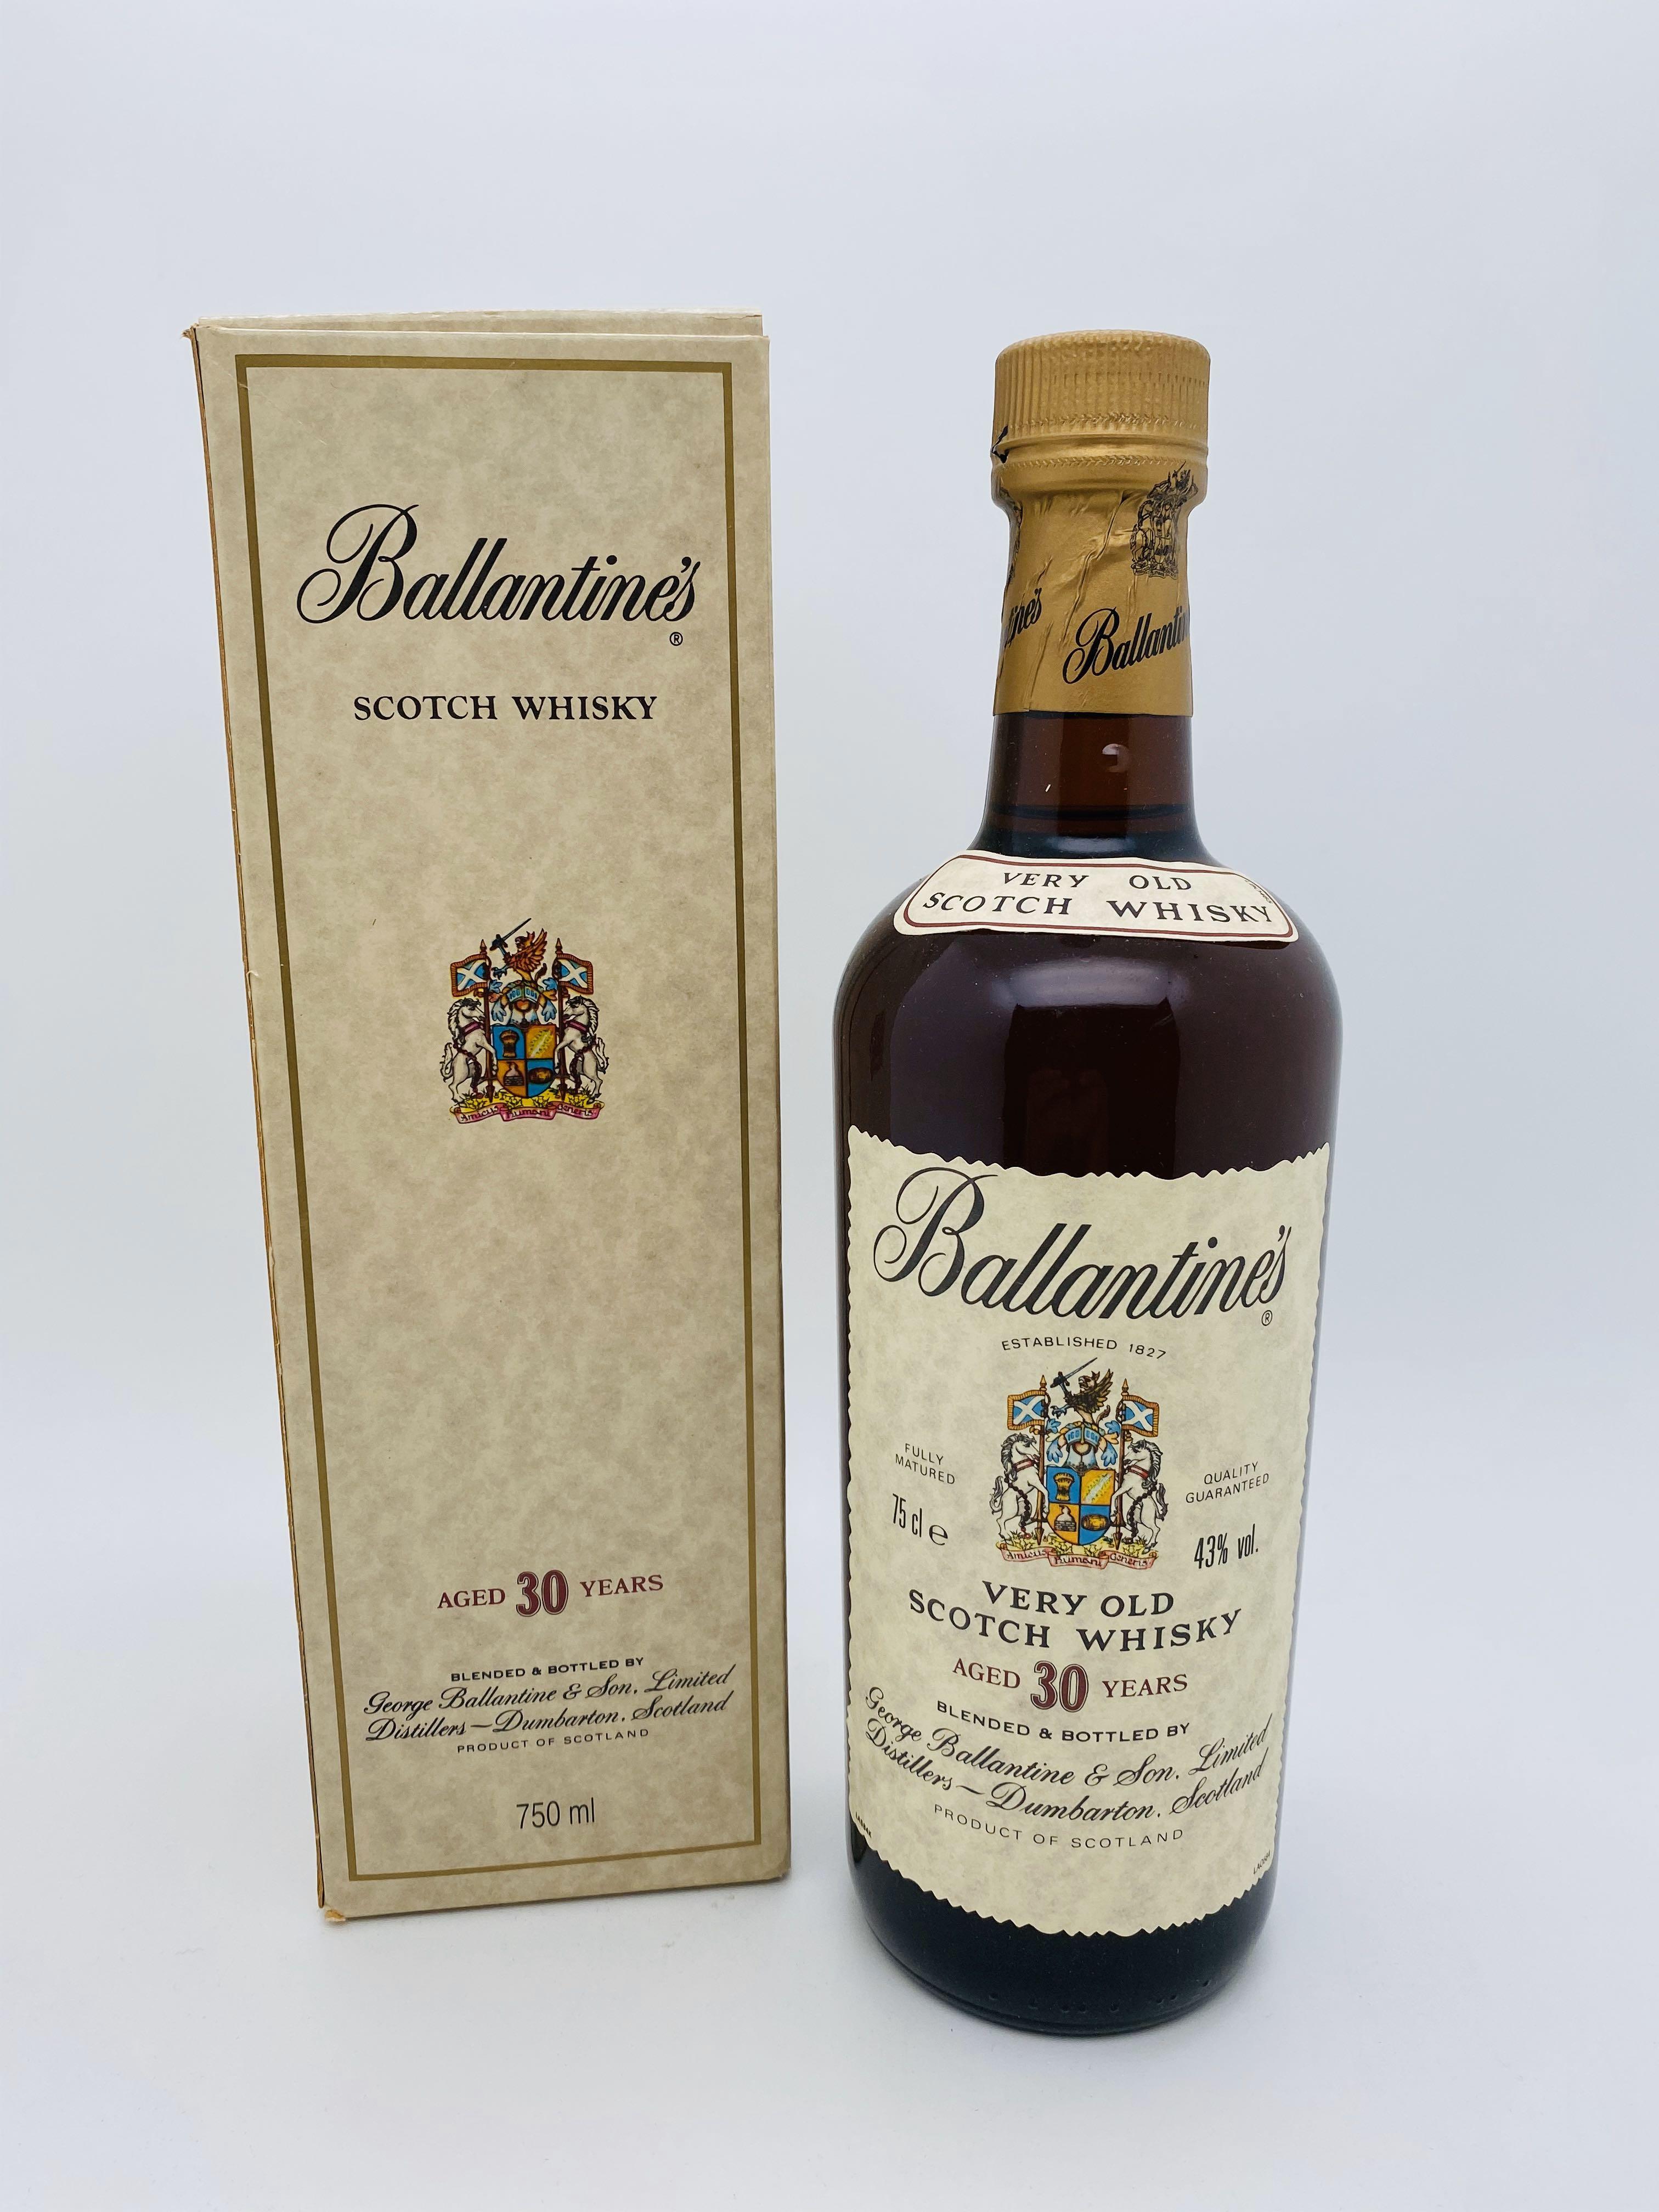 Ballantine's 30 Years Very old Sctch whisky 750ml 80年代百靈壇